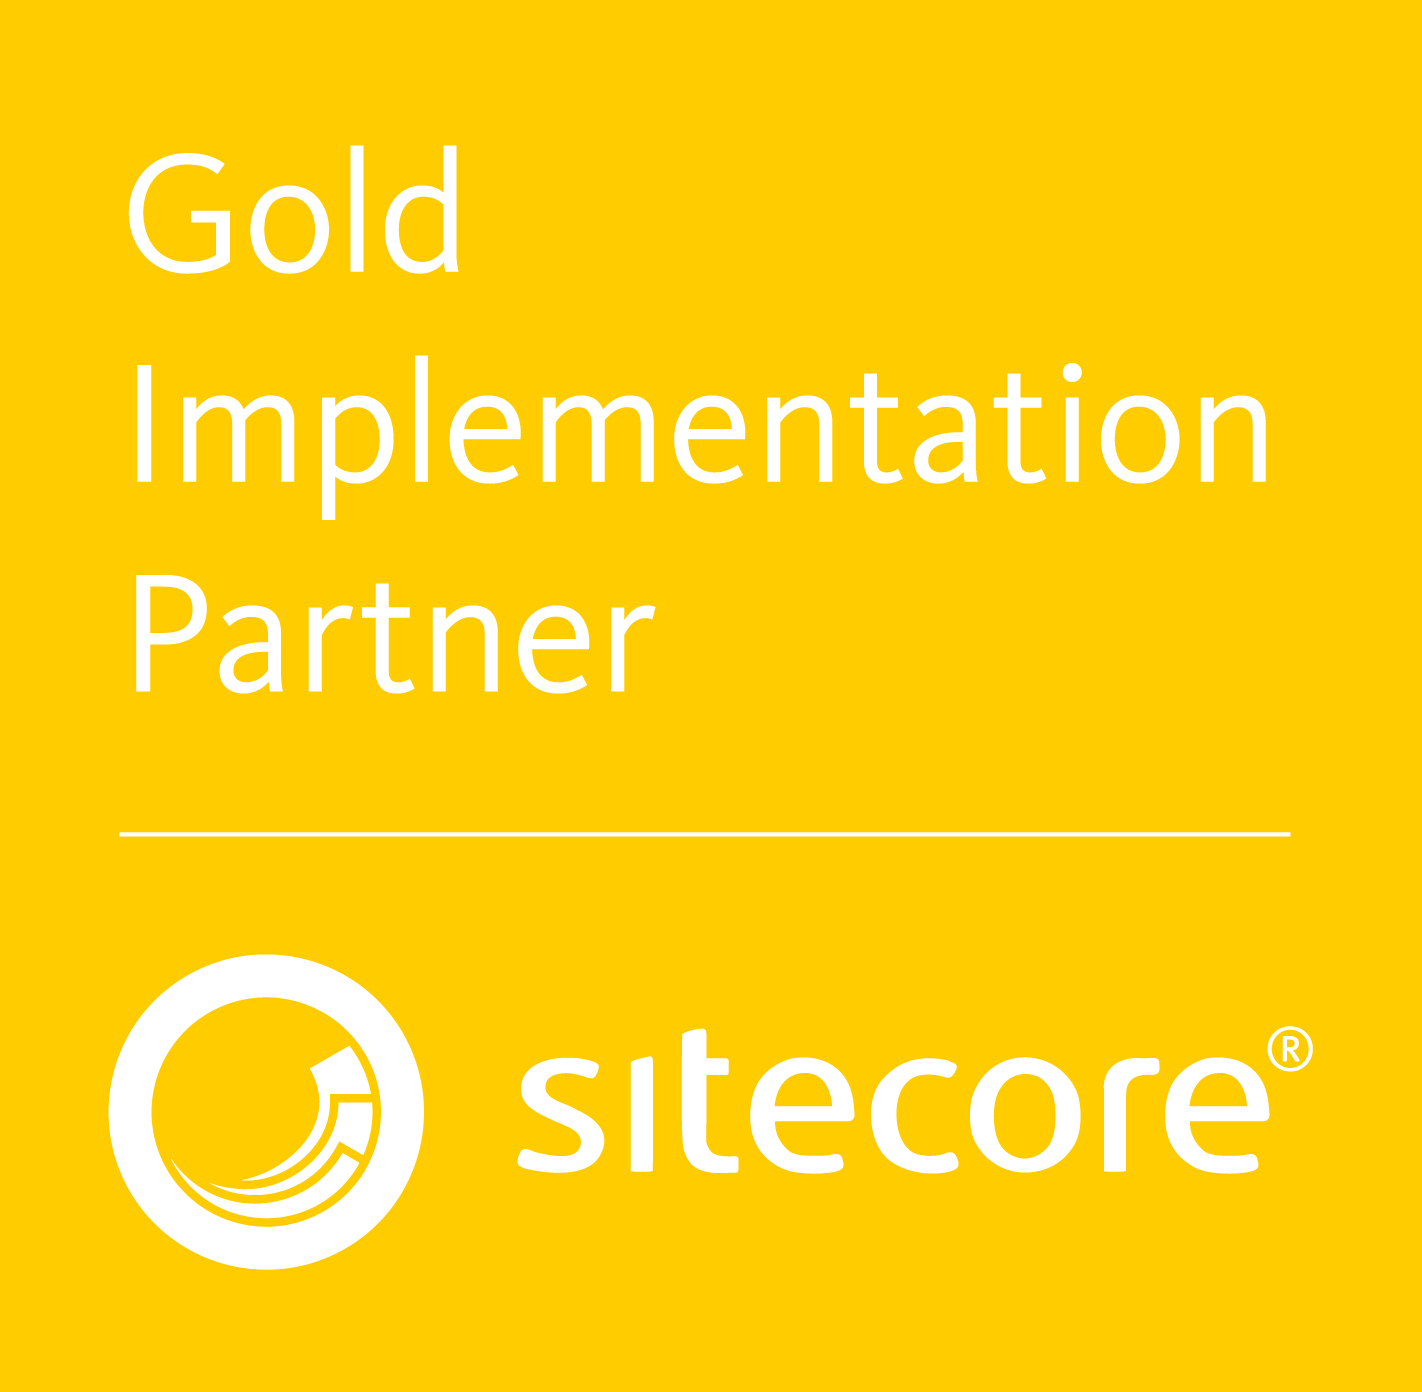 Sitecore Gold Implementation Partner